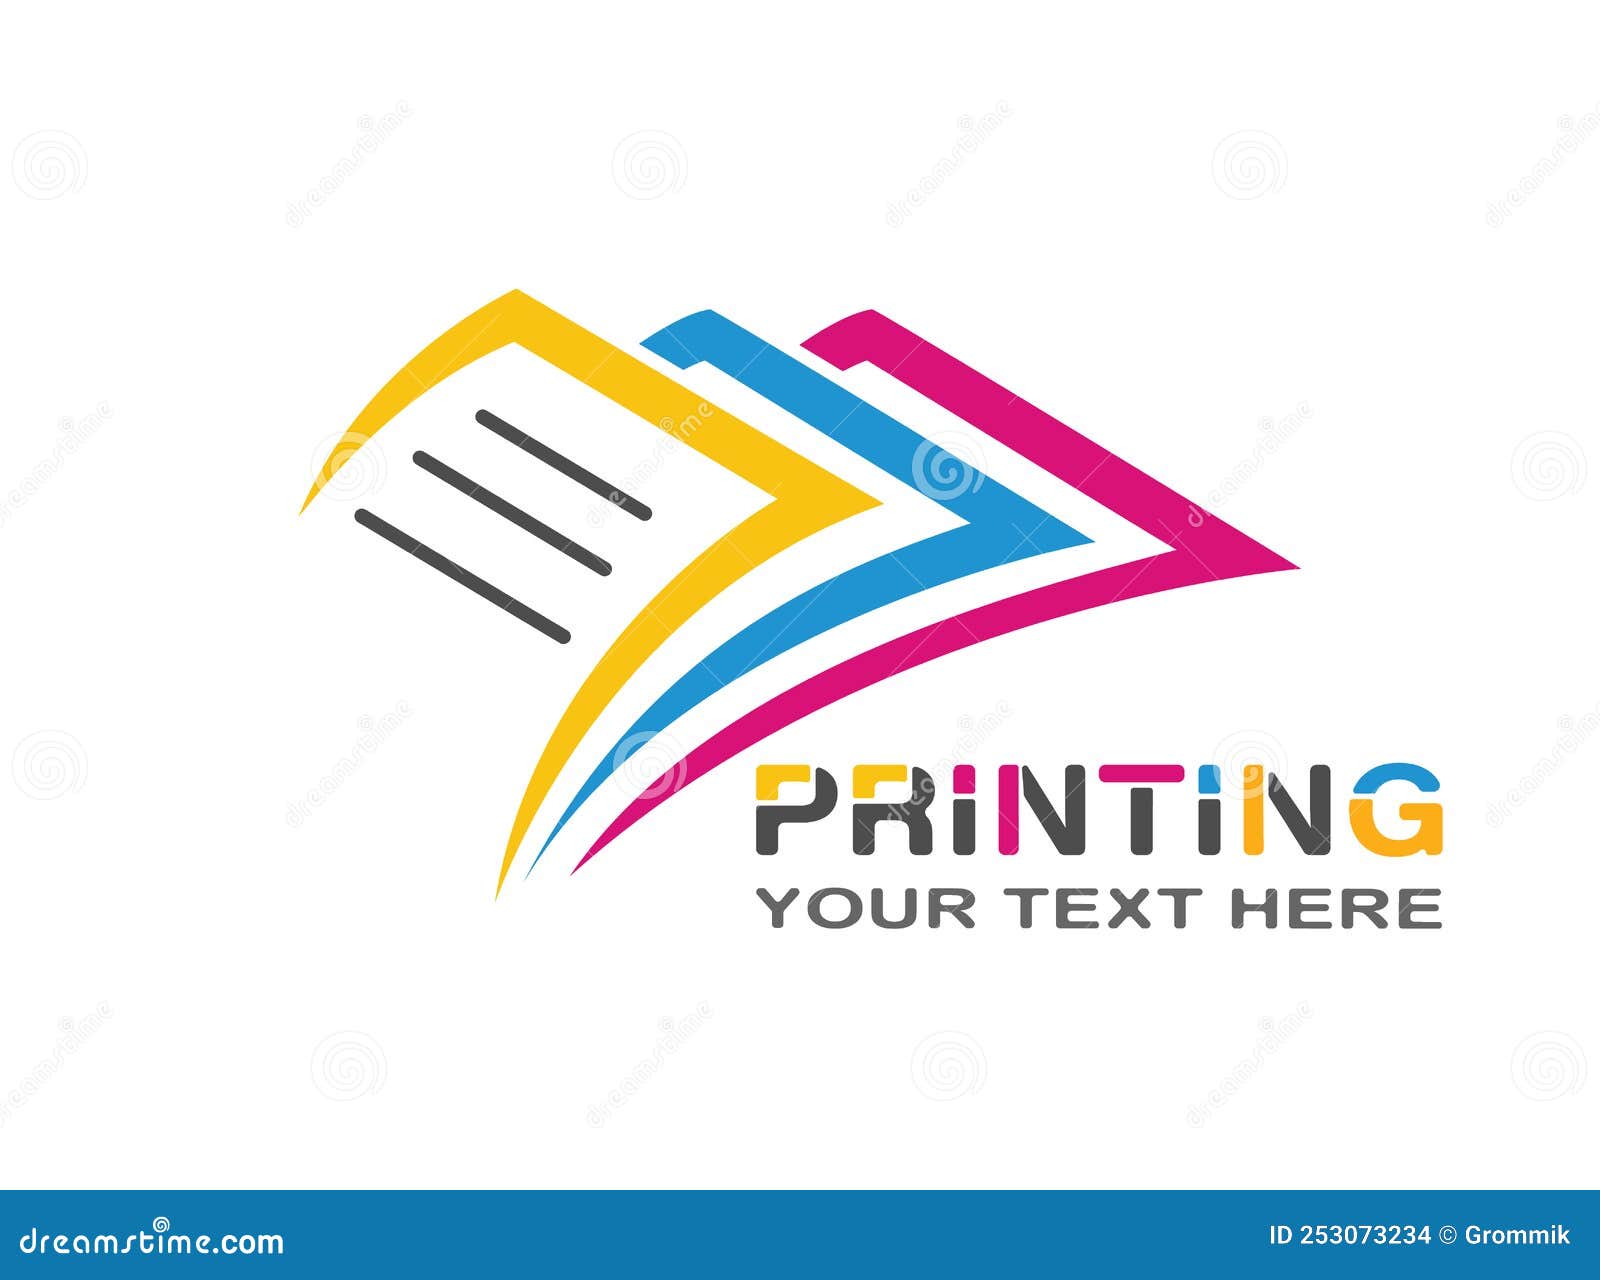 Printing Company Logo Vector Hd PNG Images, Company Name Logo Design For Digital  Printer Printing Hardwar, Background, Black, Business PNG Image For Free  Download